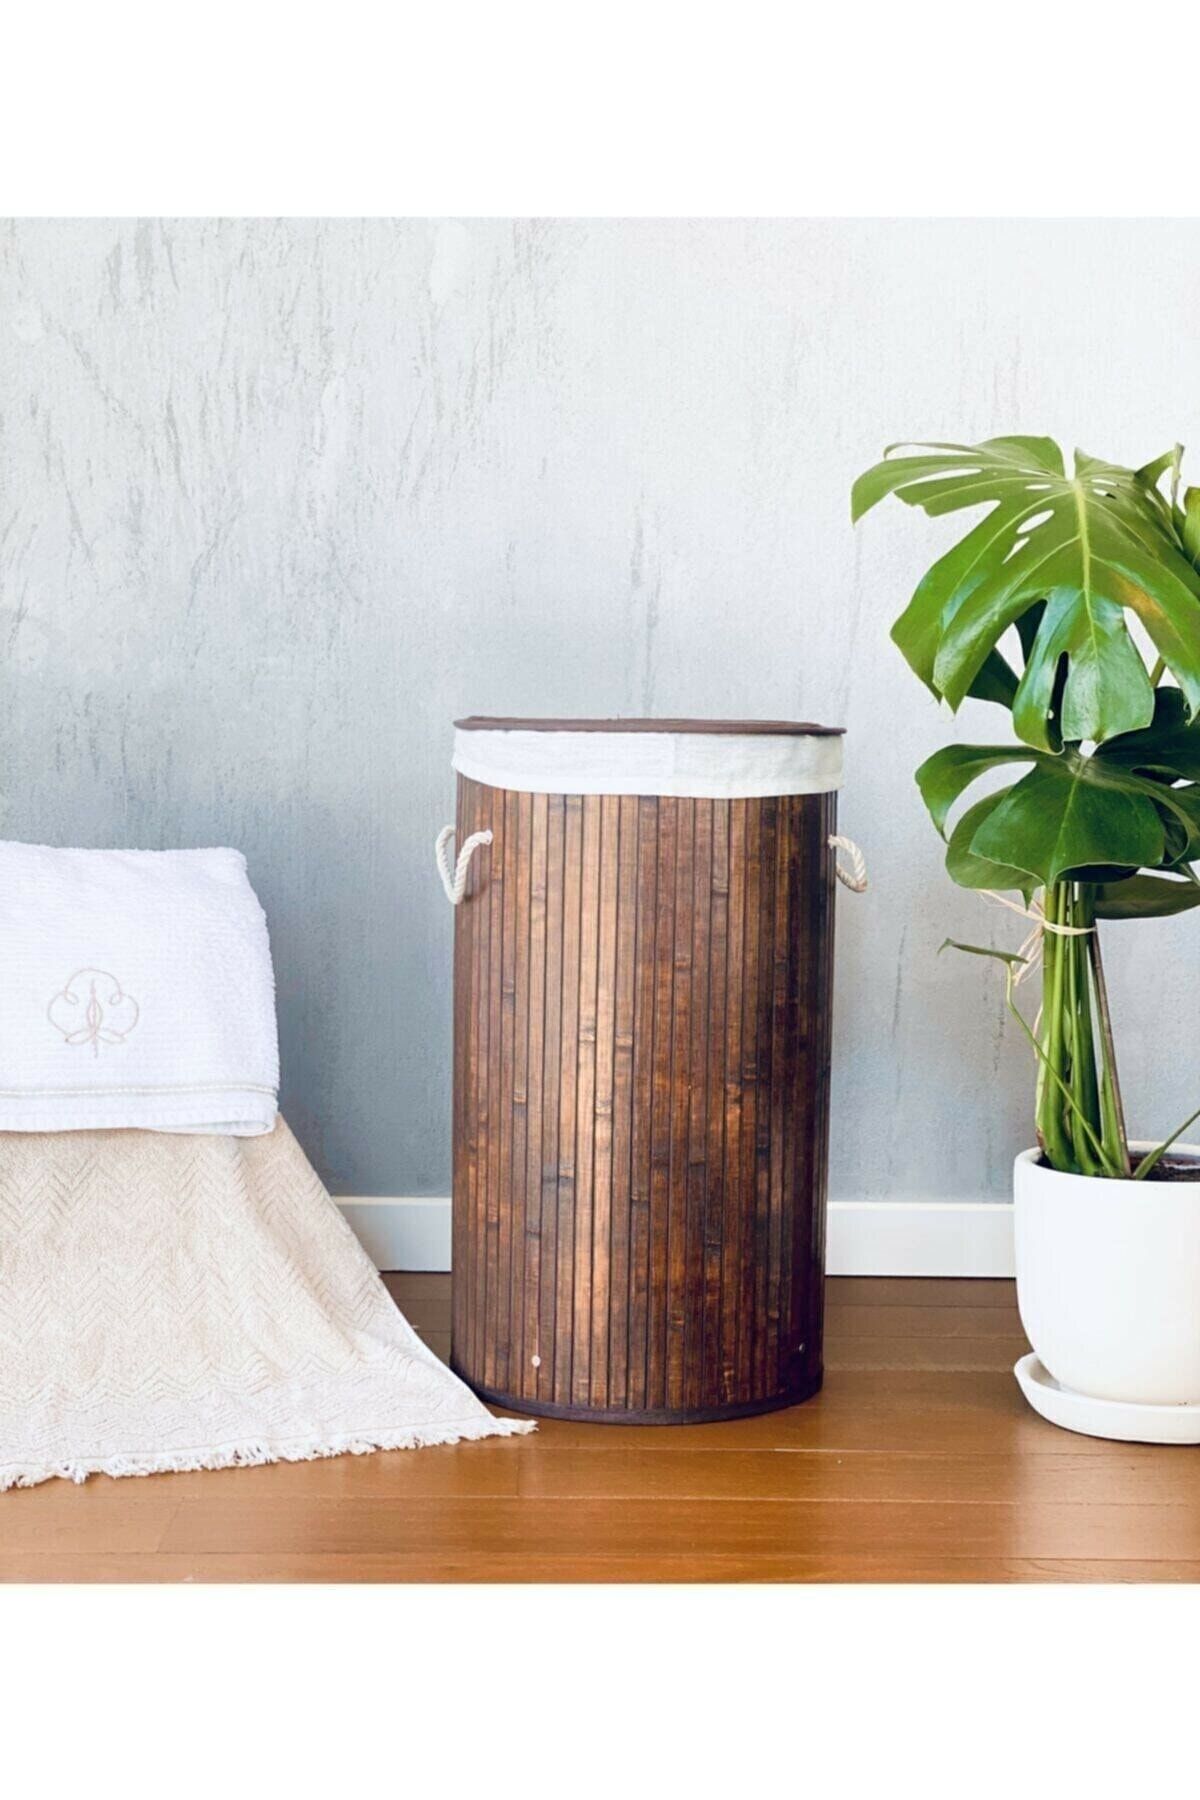 E-LİFE HOME Katlanır Oval Bambu Çamaşır Kirli Sepeti